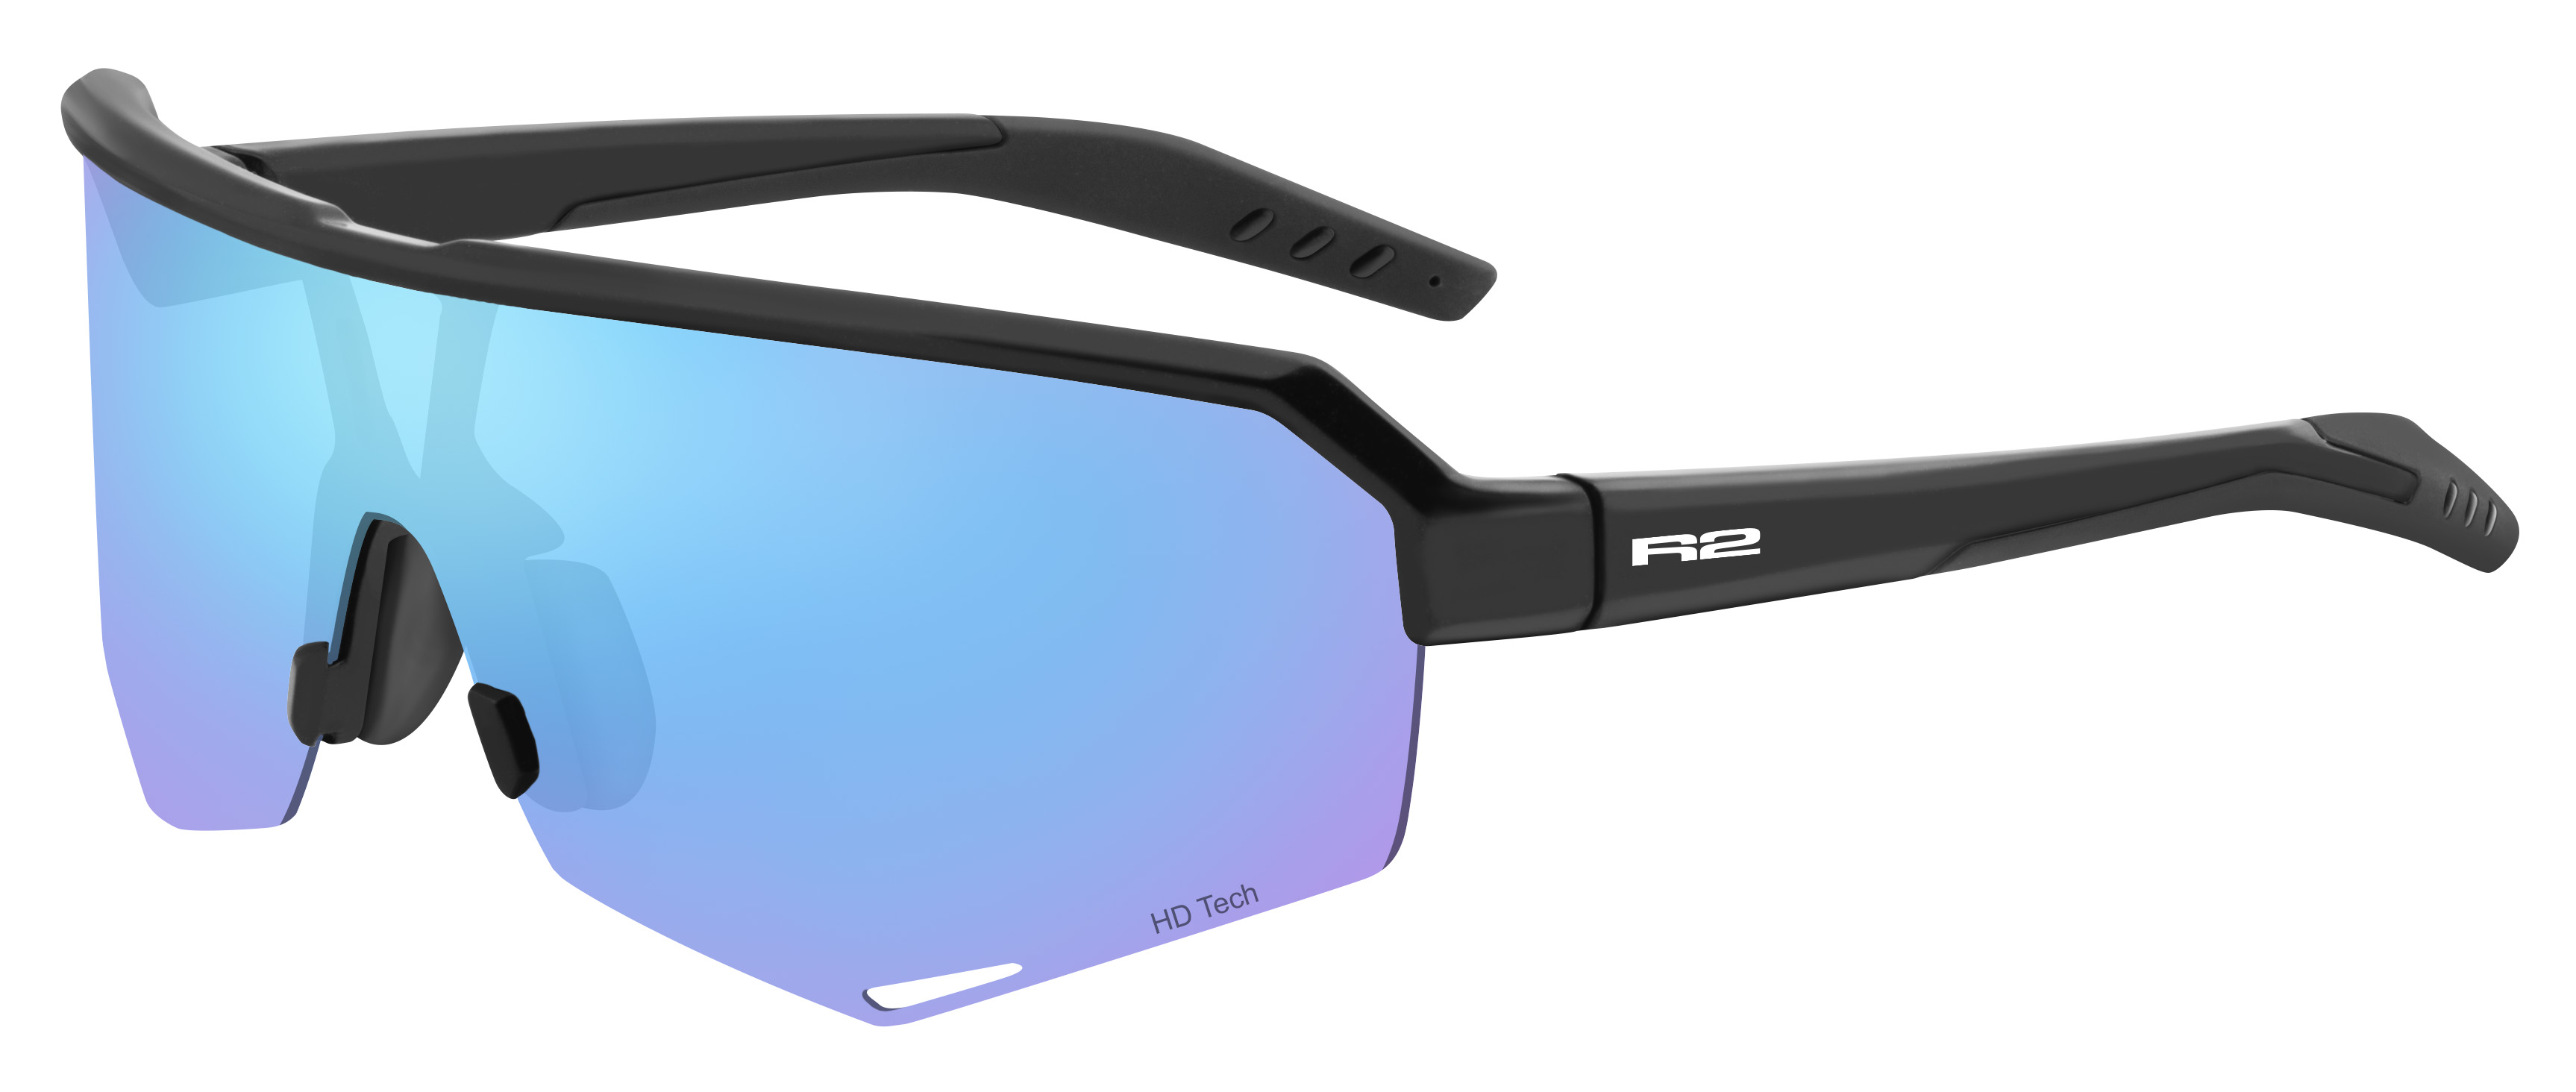 HD sport sunglasses R2 FLUKE AT100G